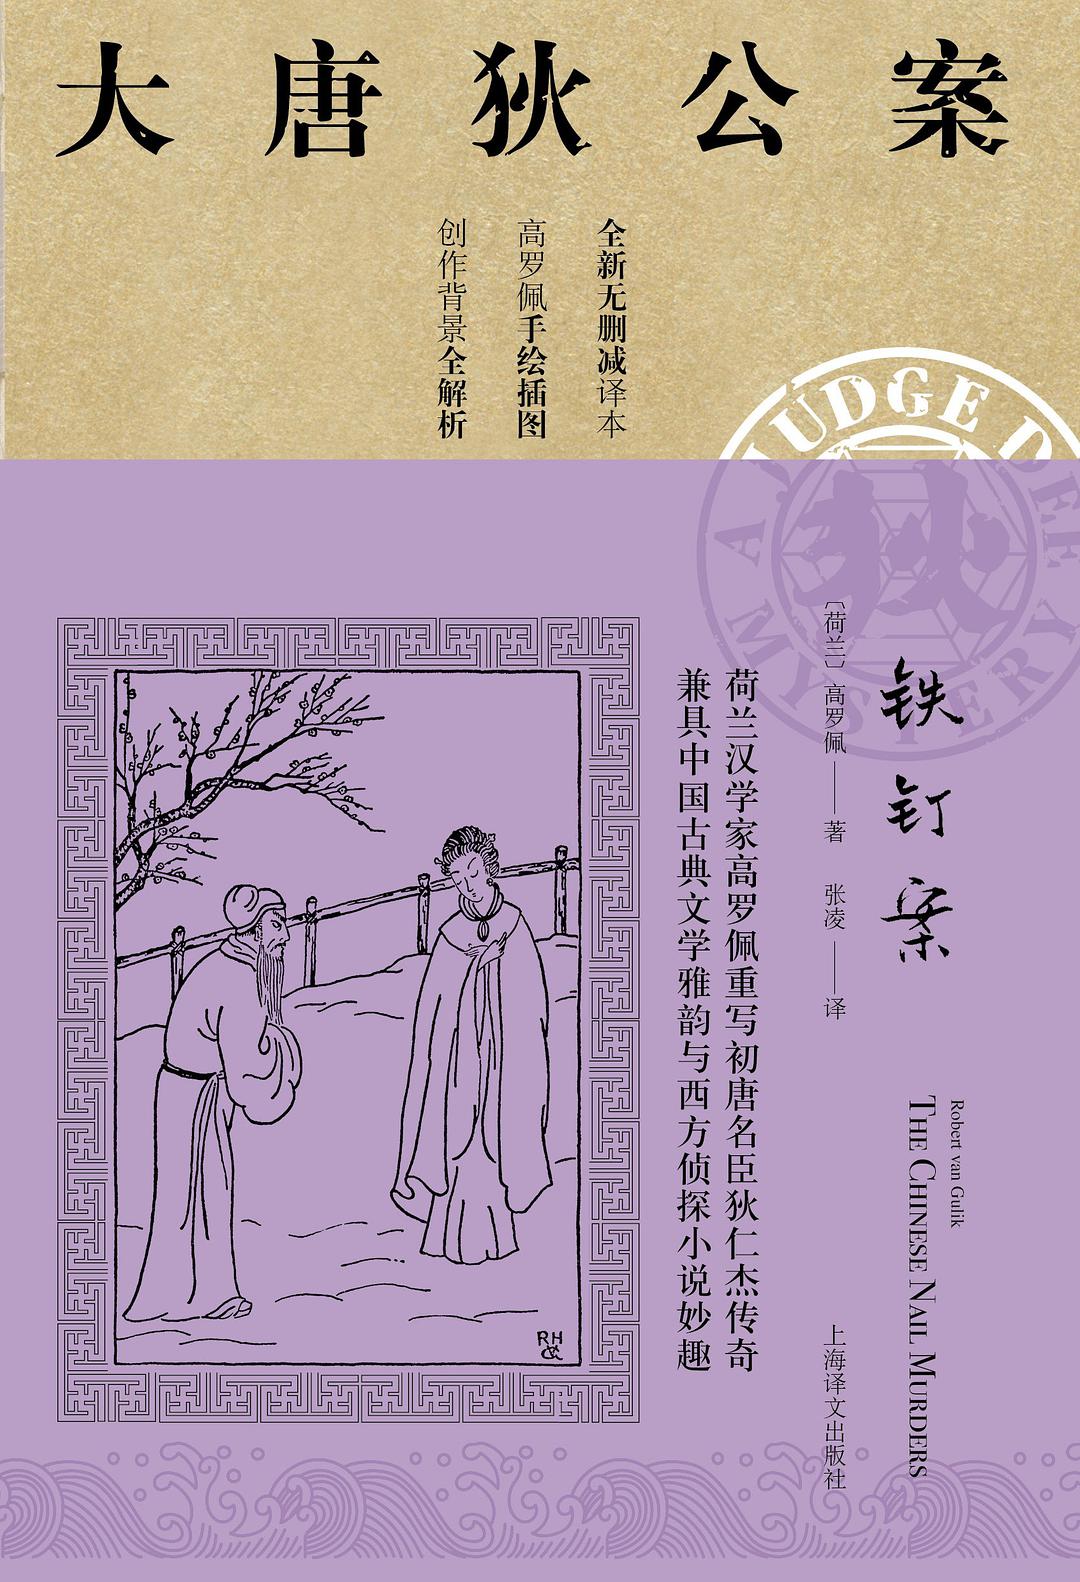 Robert van Gulik: 铁钉案 (Chinese language, 2019, 上海译文出版社)